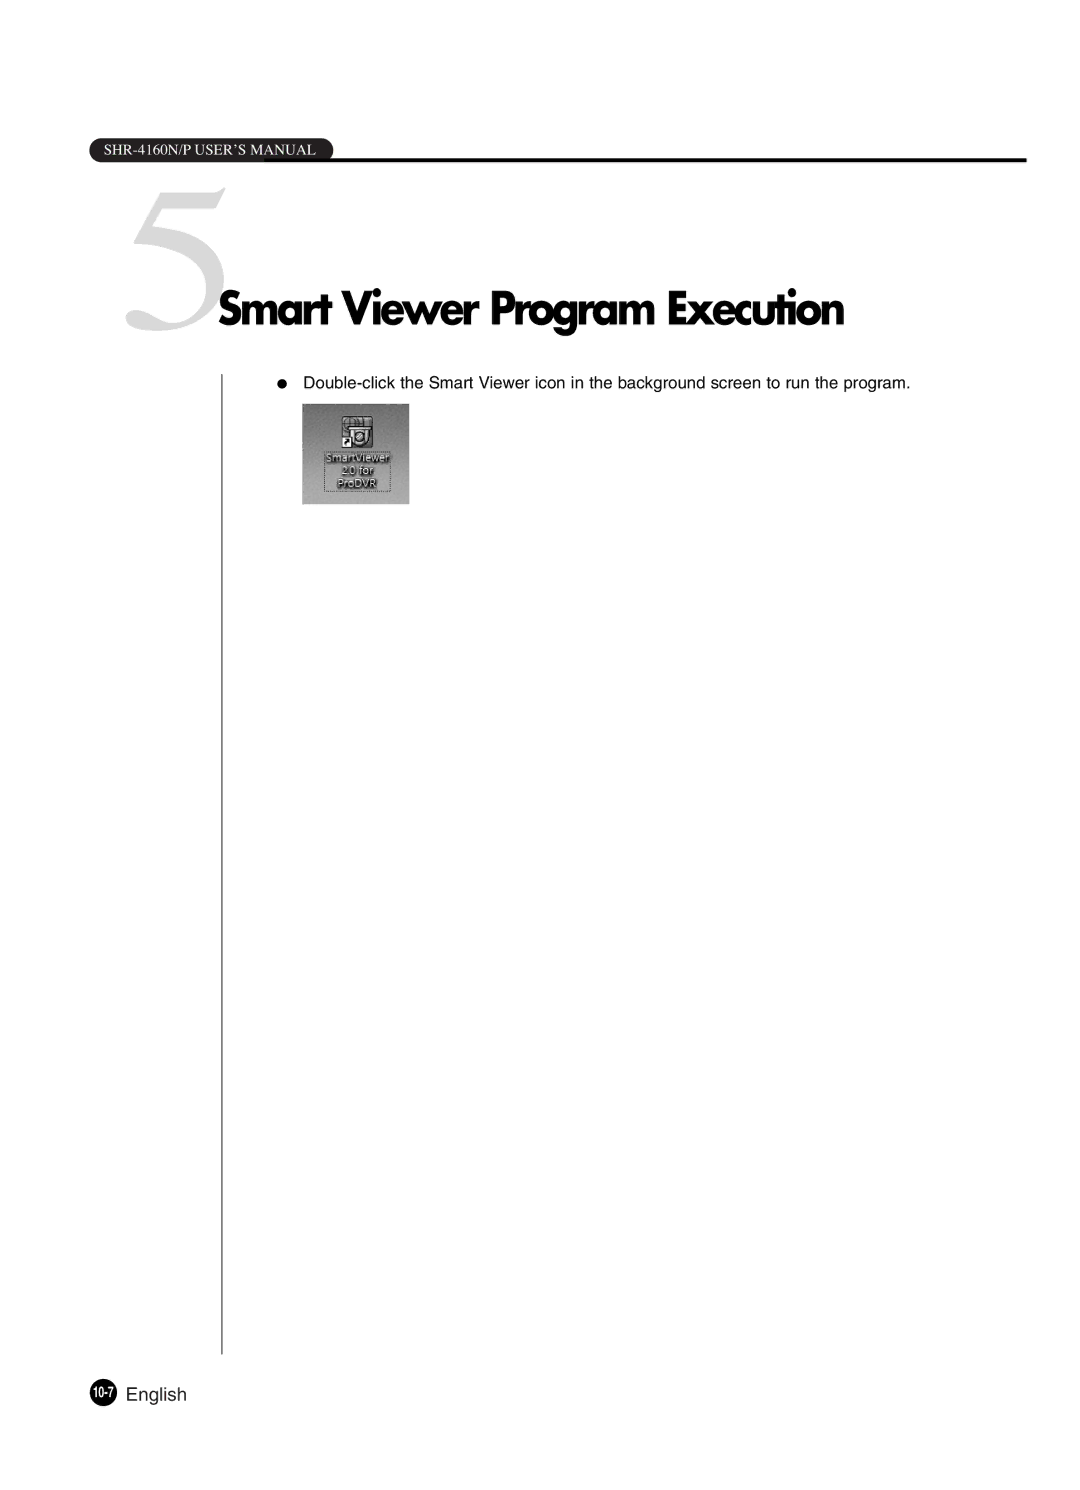 Samsung SHR-4160P manual 5Smart Viewer Program Execution, 10-7English 